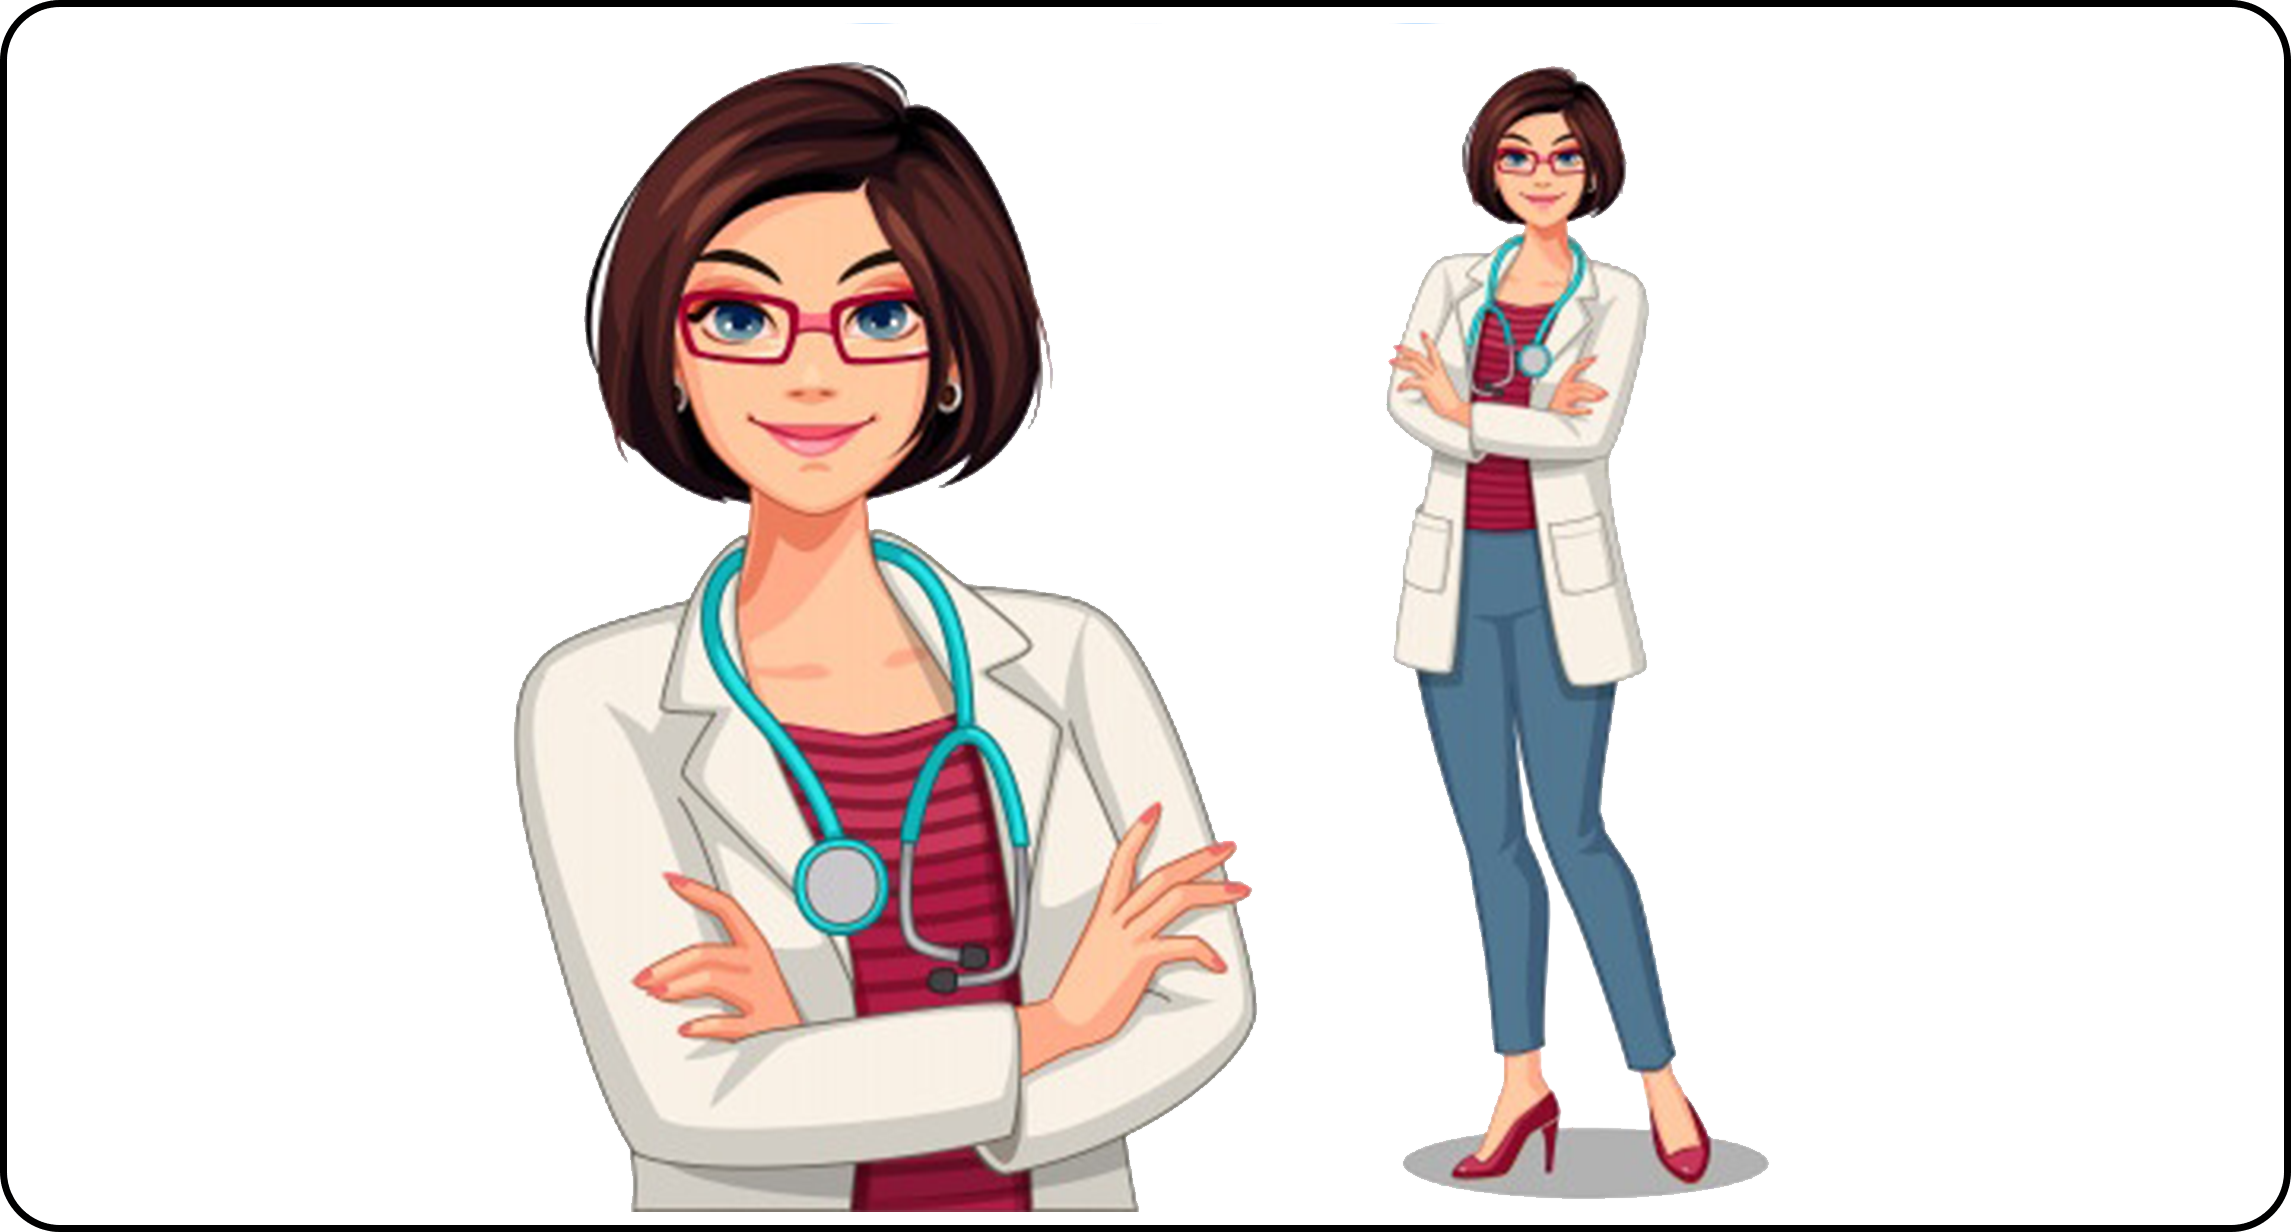 cartoon lady doctor image
